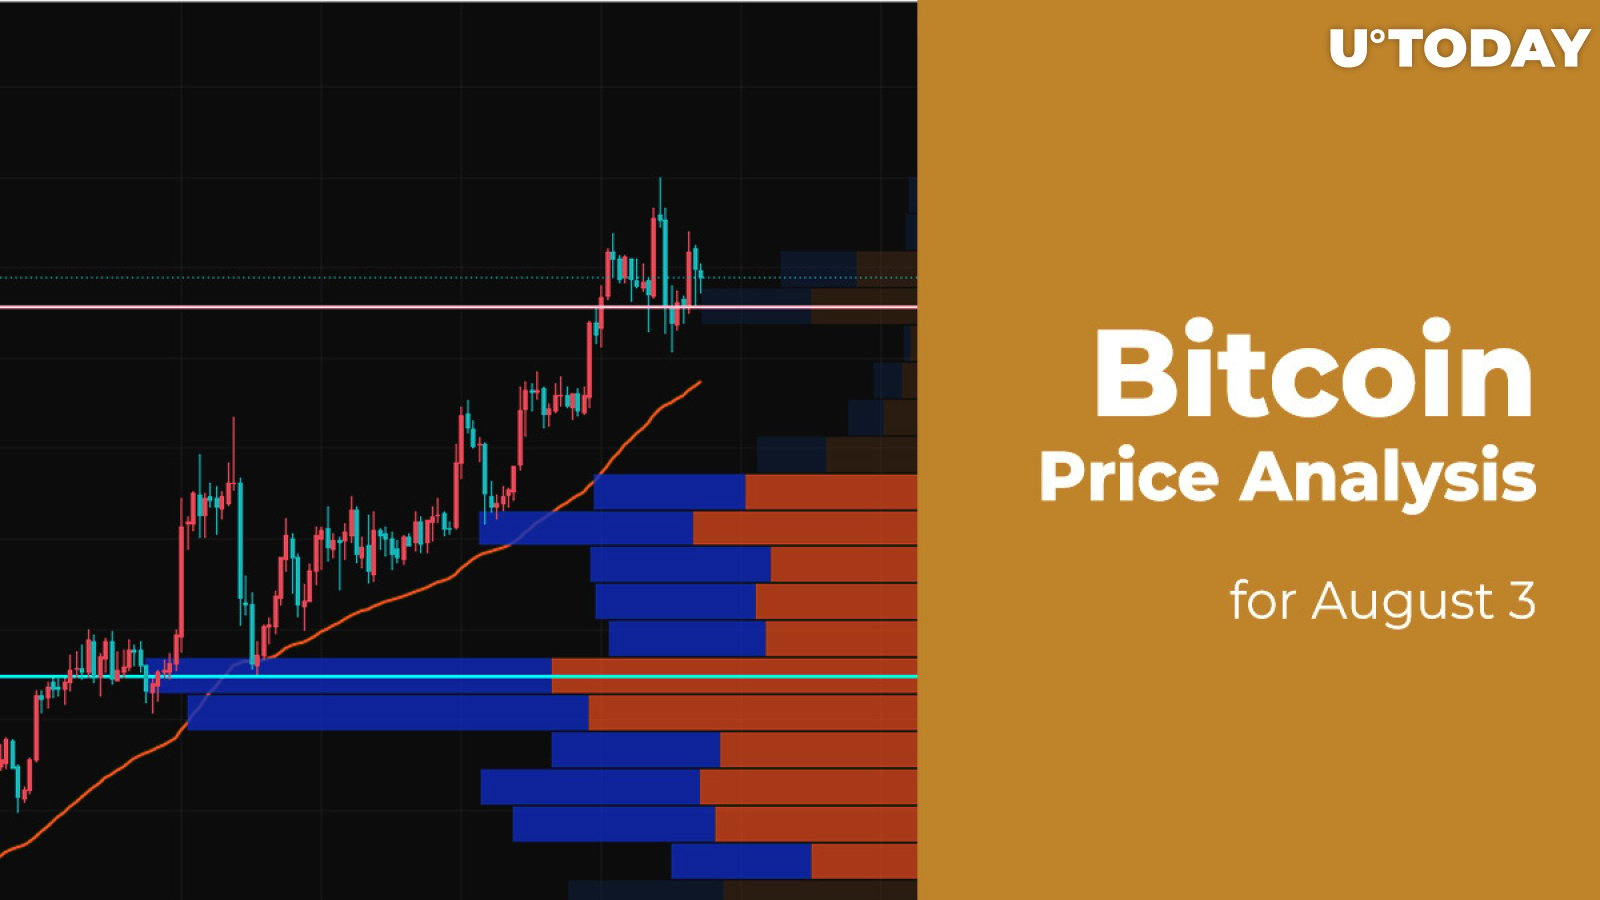 Bitcoin (BTC) Price Analysis for August 3